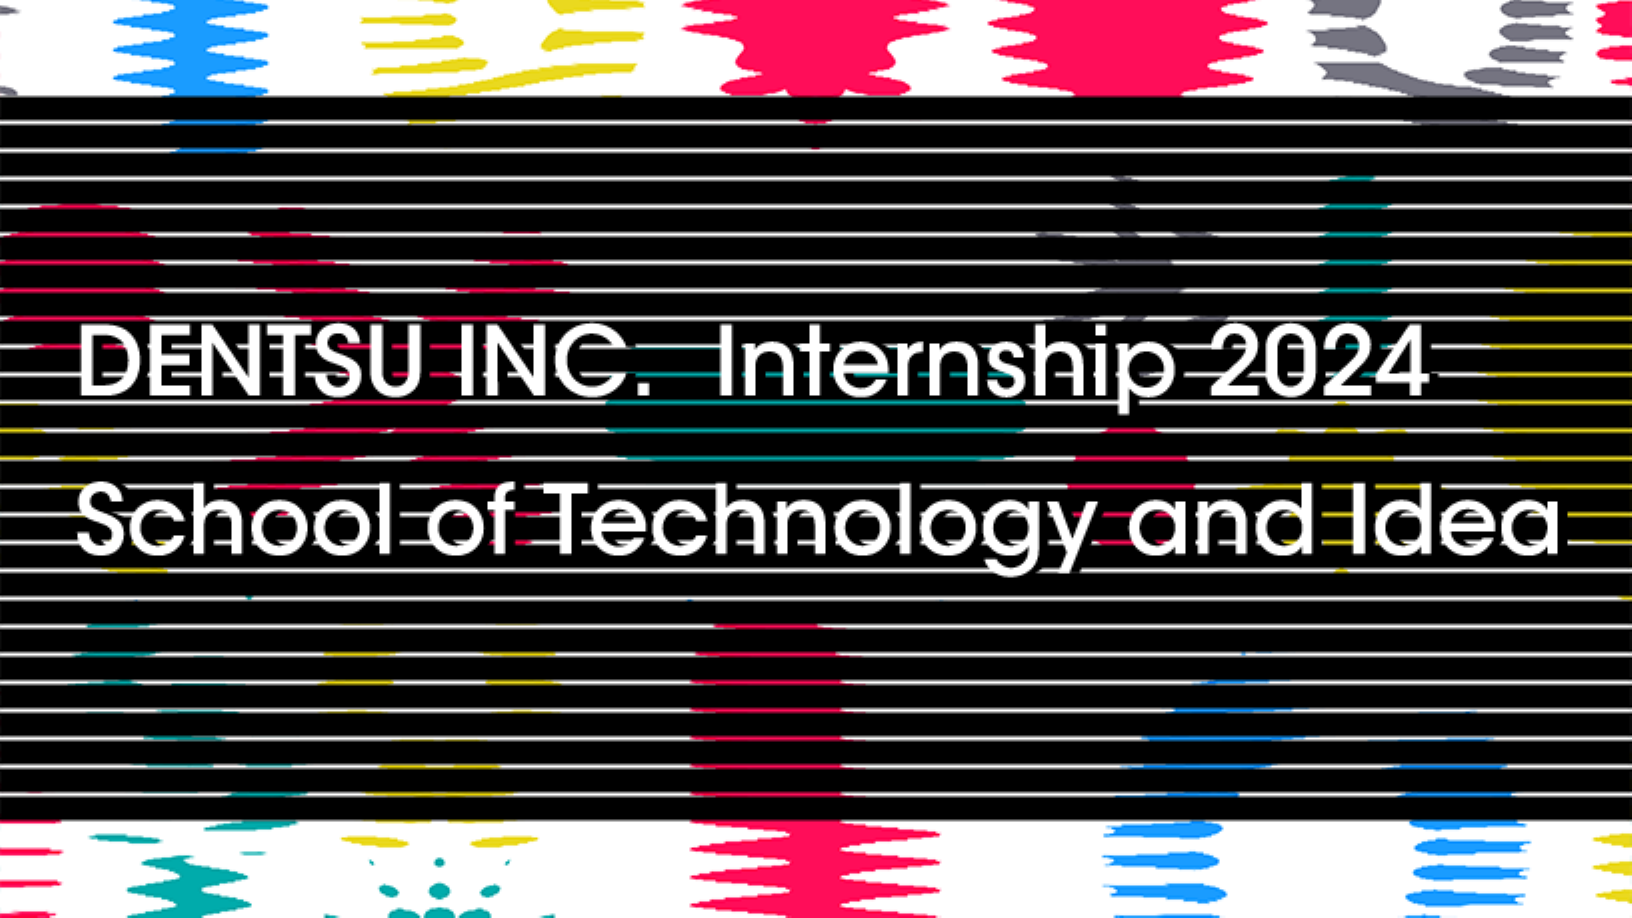 DENTSU INC. Internship 2024 School of Technology and Idea